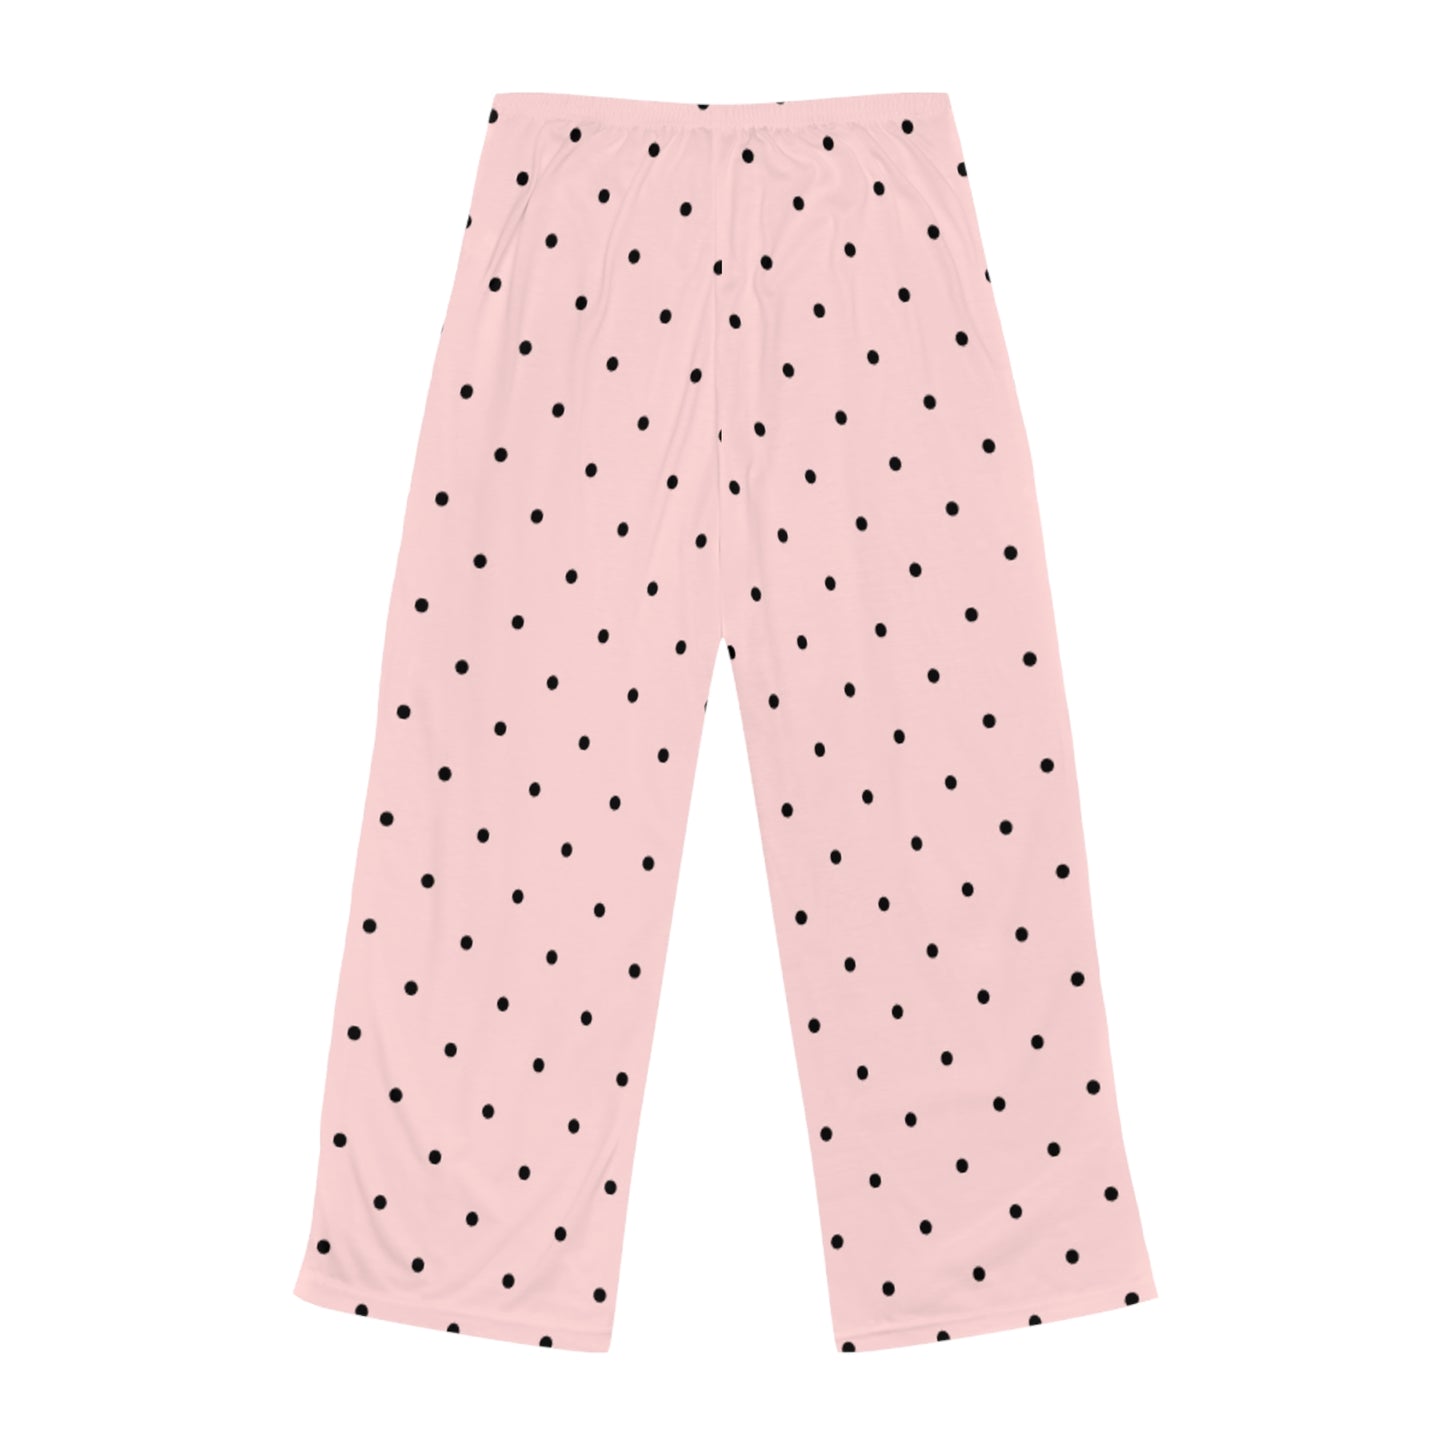 Lady pink polka dot pajama pants